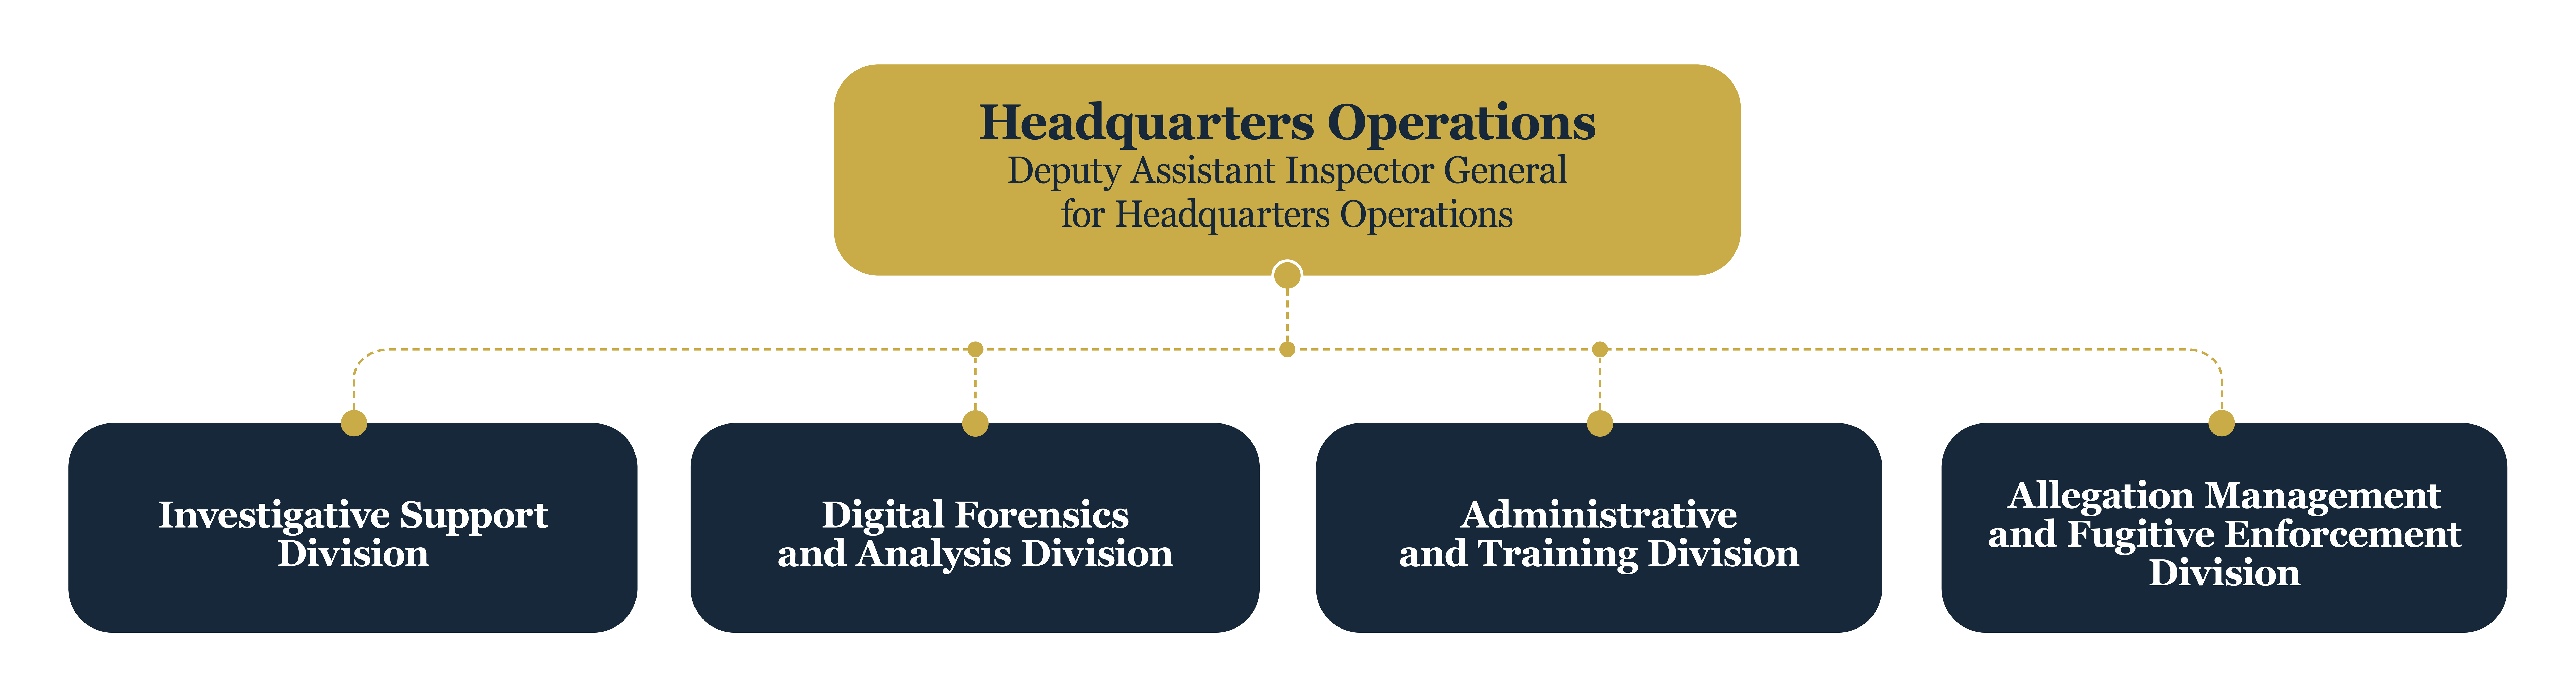 oig-org-chart-headquarters-operations